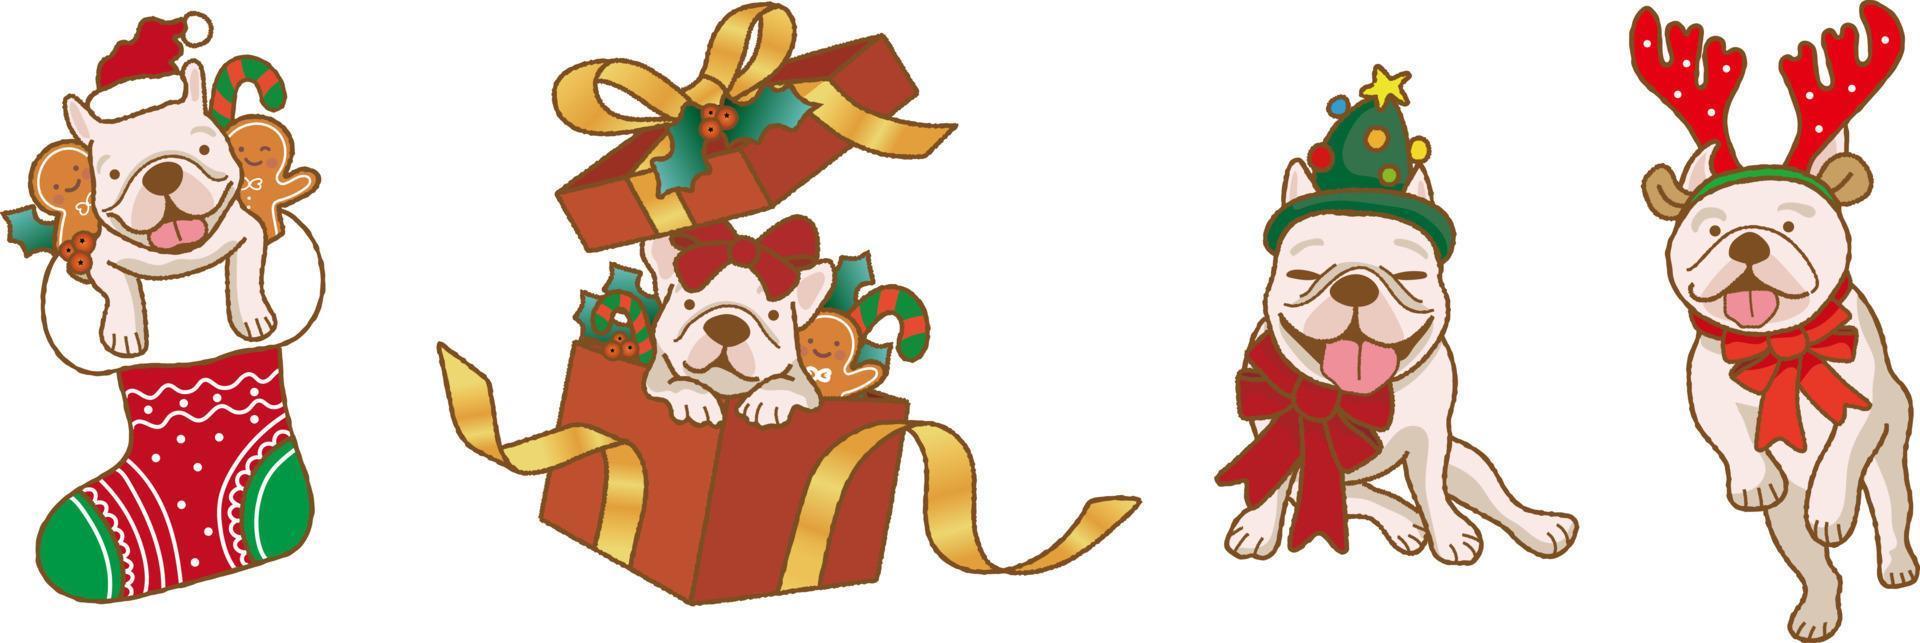 cartoon franse bulldog hond voor kerstdag illustratie premium vector